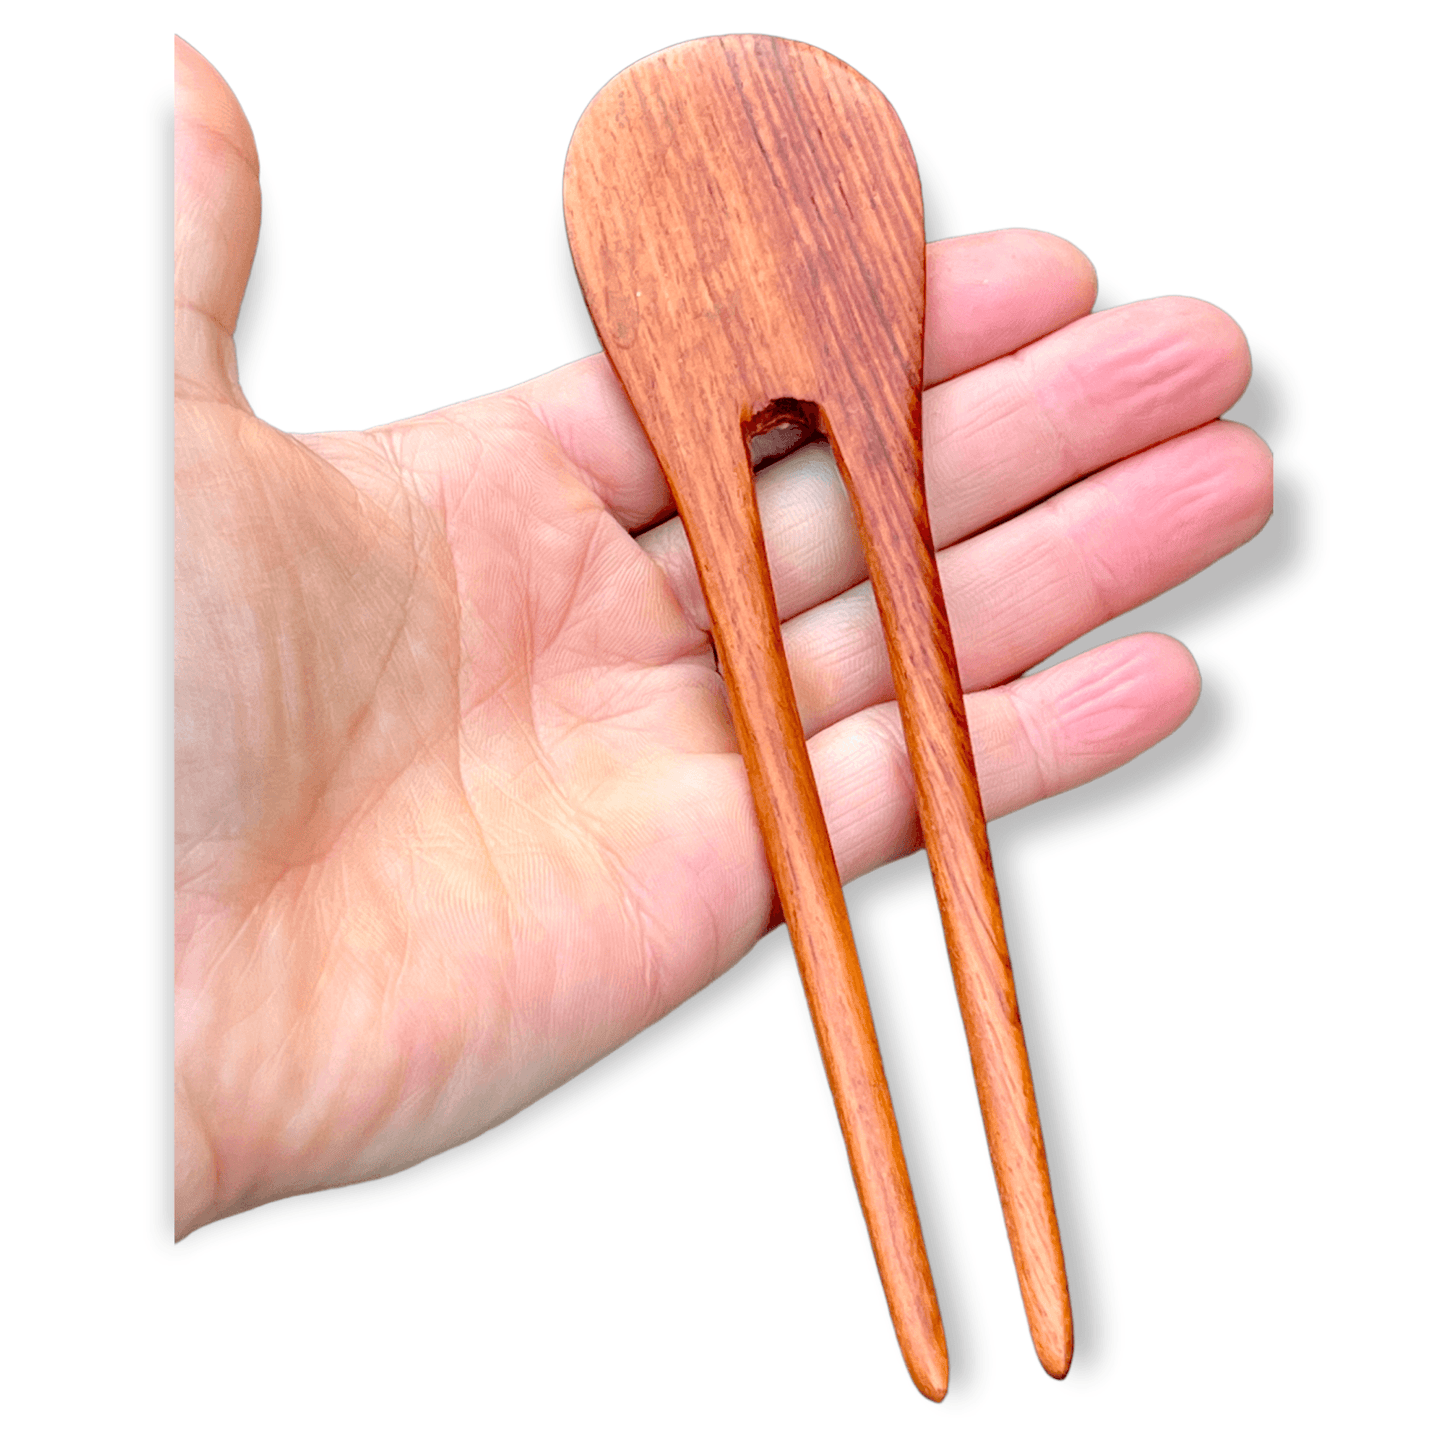 Wooden handmade hair pick or comb for long hair - Sundara Joon